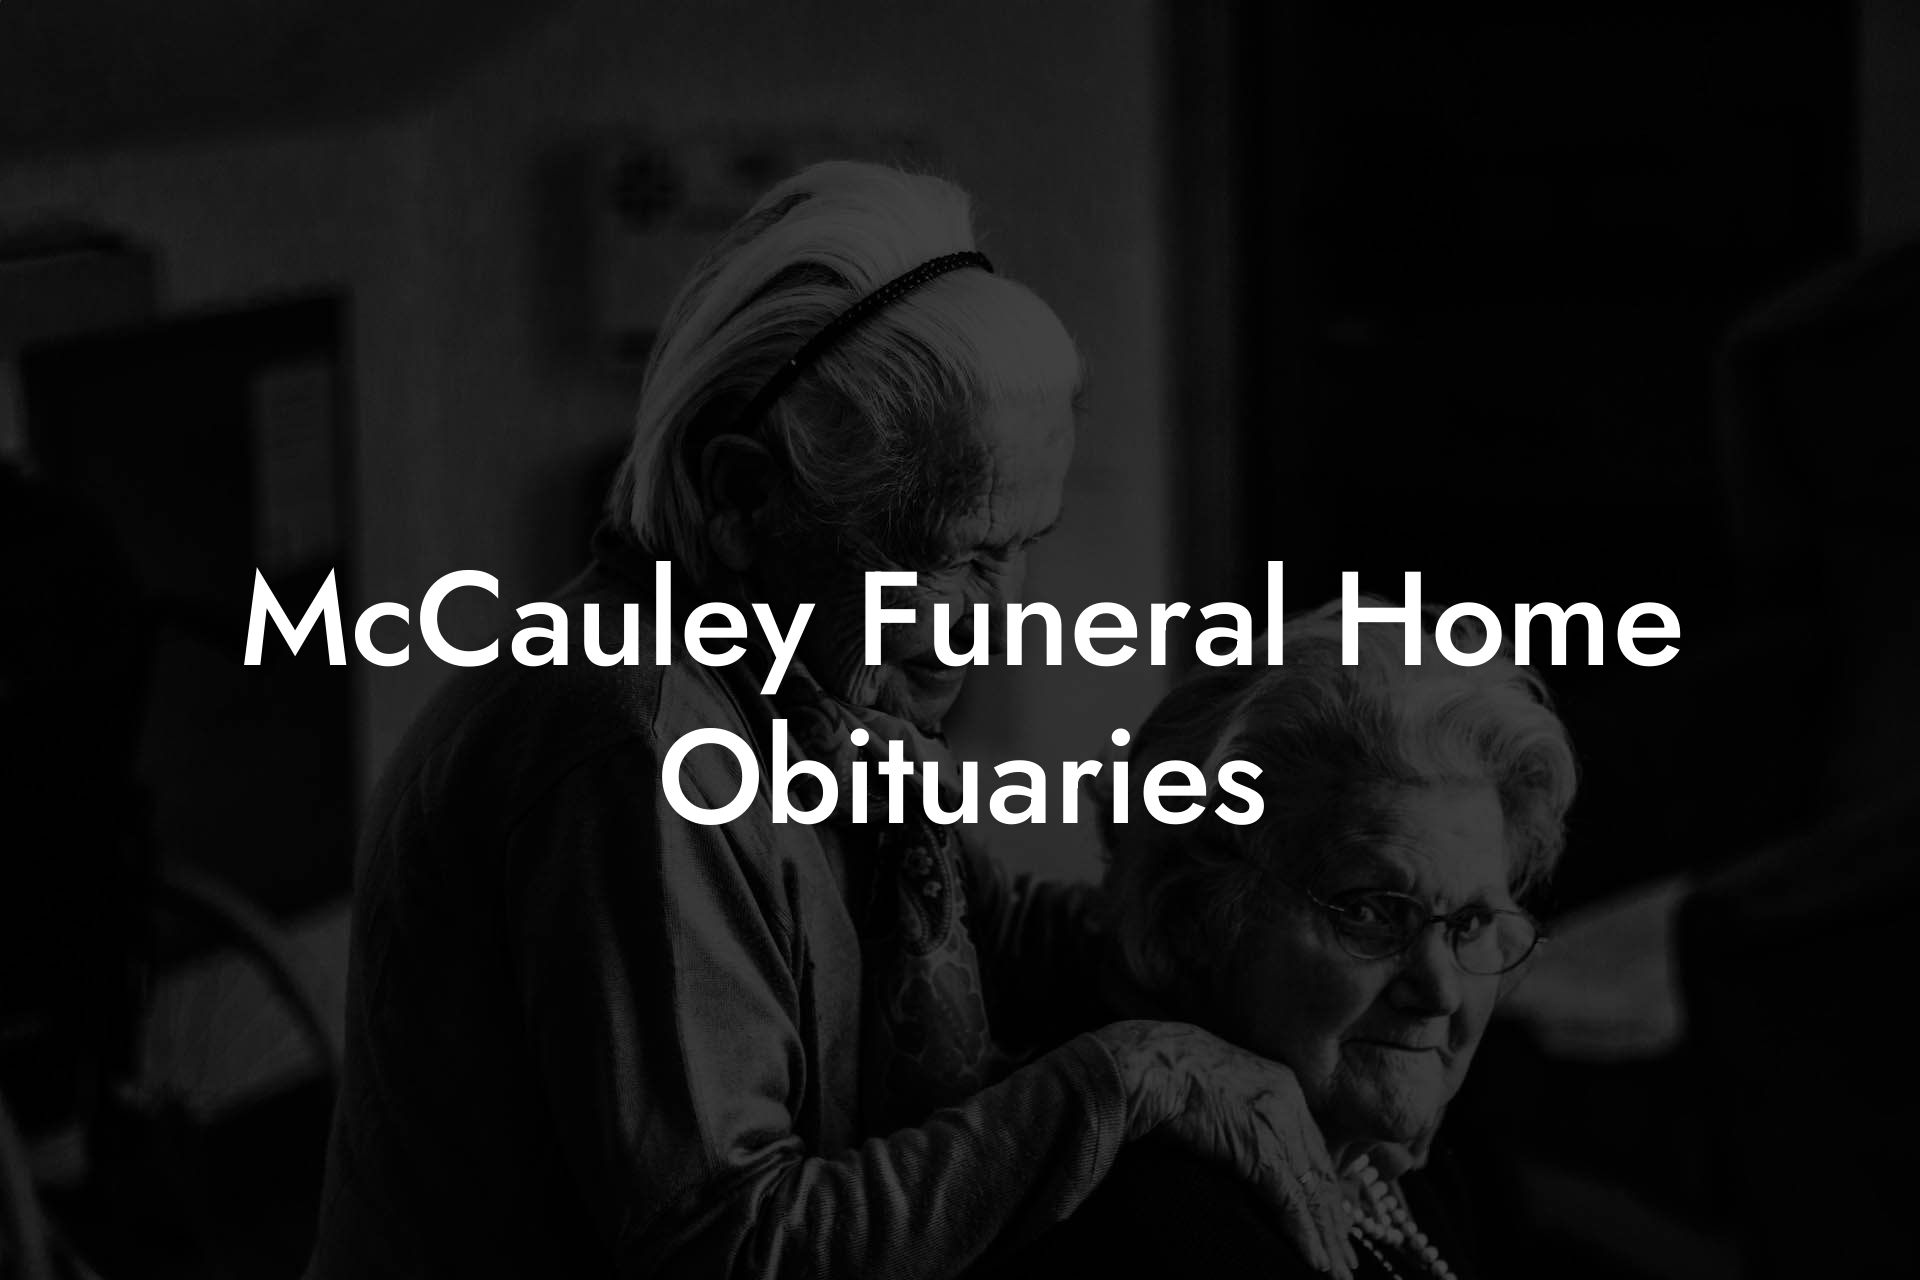 McCauley Funeral Home Obituaries